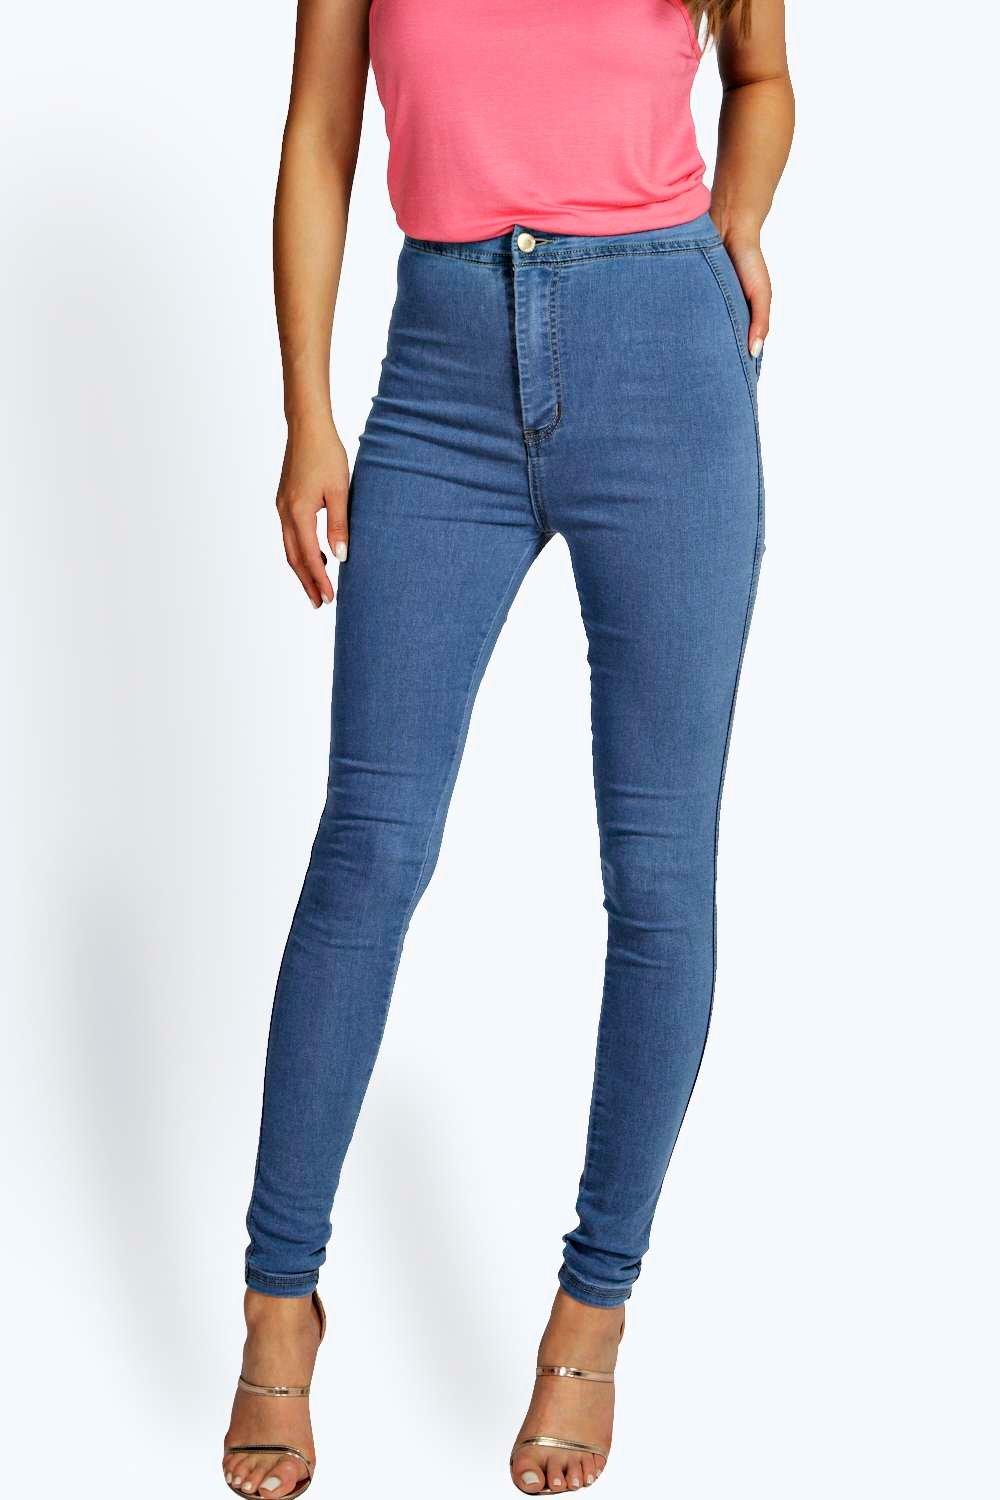 macys high waisted jeans